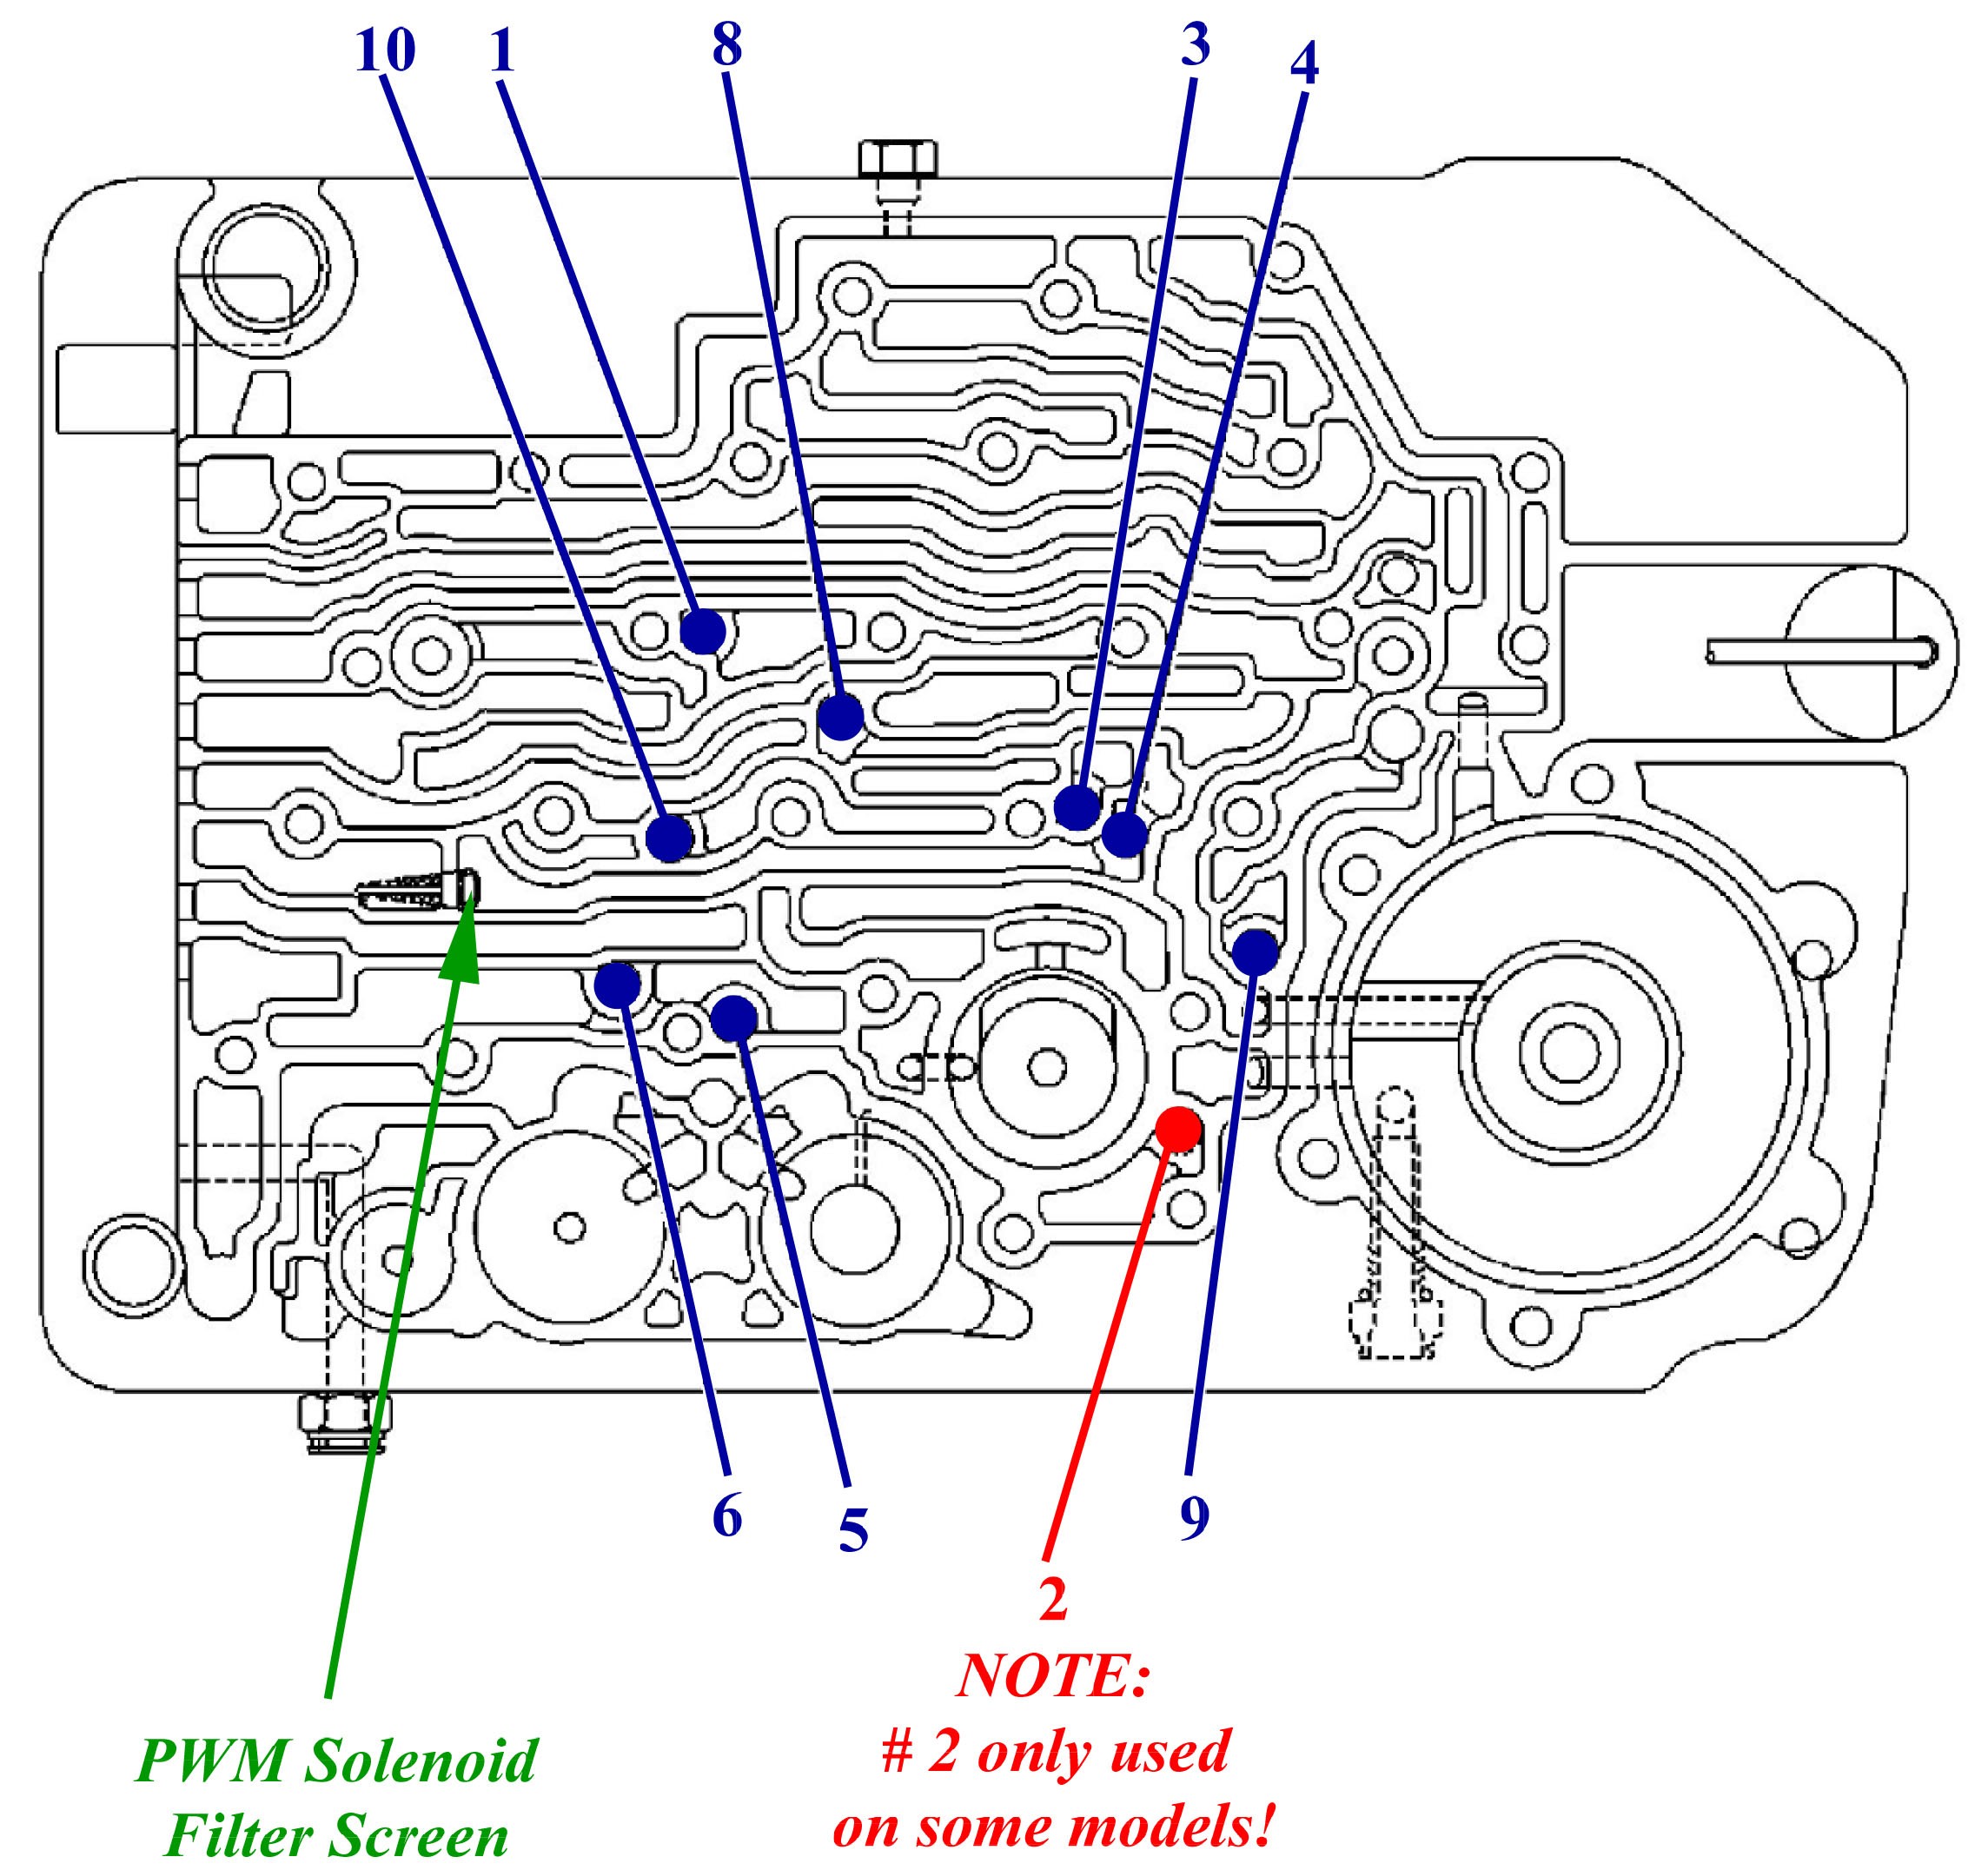 Chevy Suburban Parts Diagram 4r100 Transmission Valve Body Diagram E4od Parts Diagram Wiring Of Chevy Suburban Parts Diagram